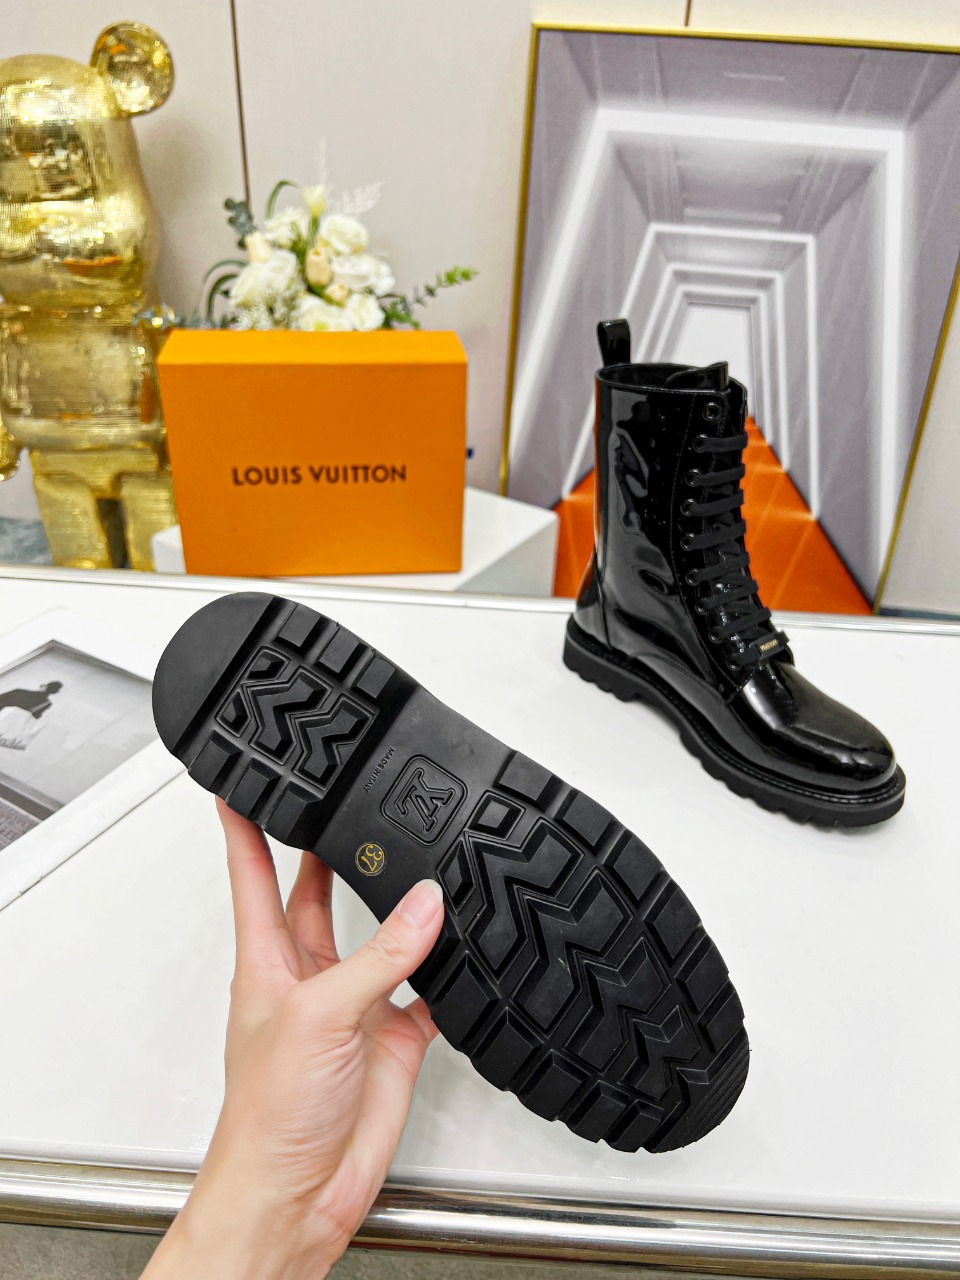 LV平底靴采用小牛皮碰撞橡胶元素VuittonLVCircle标识栖身长鞋带面橡胶外底延续军靴设计搭配M